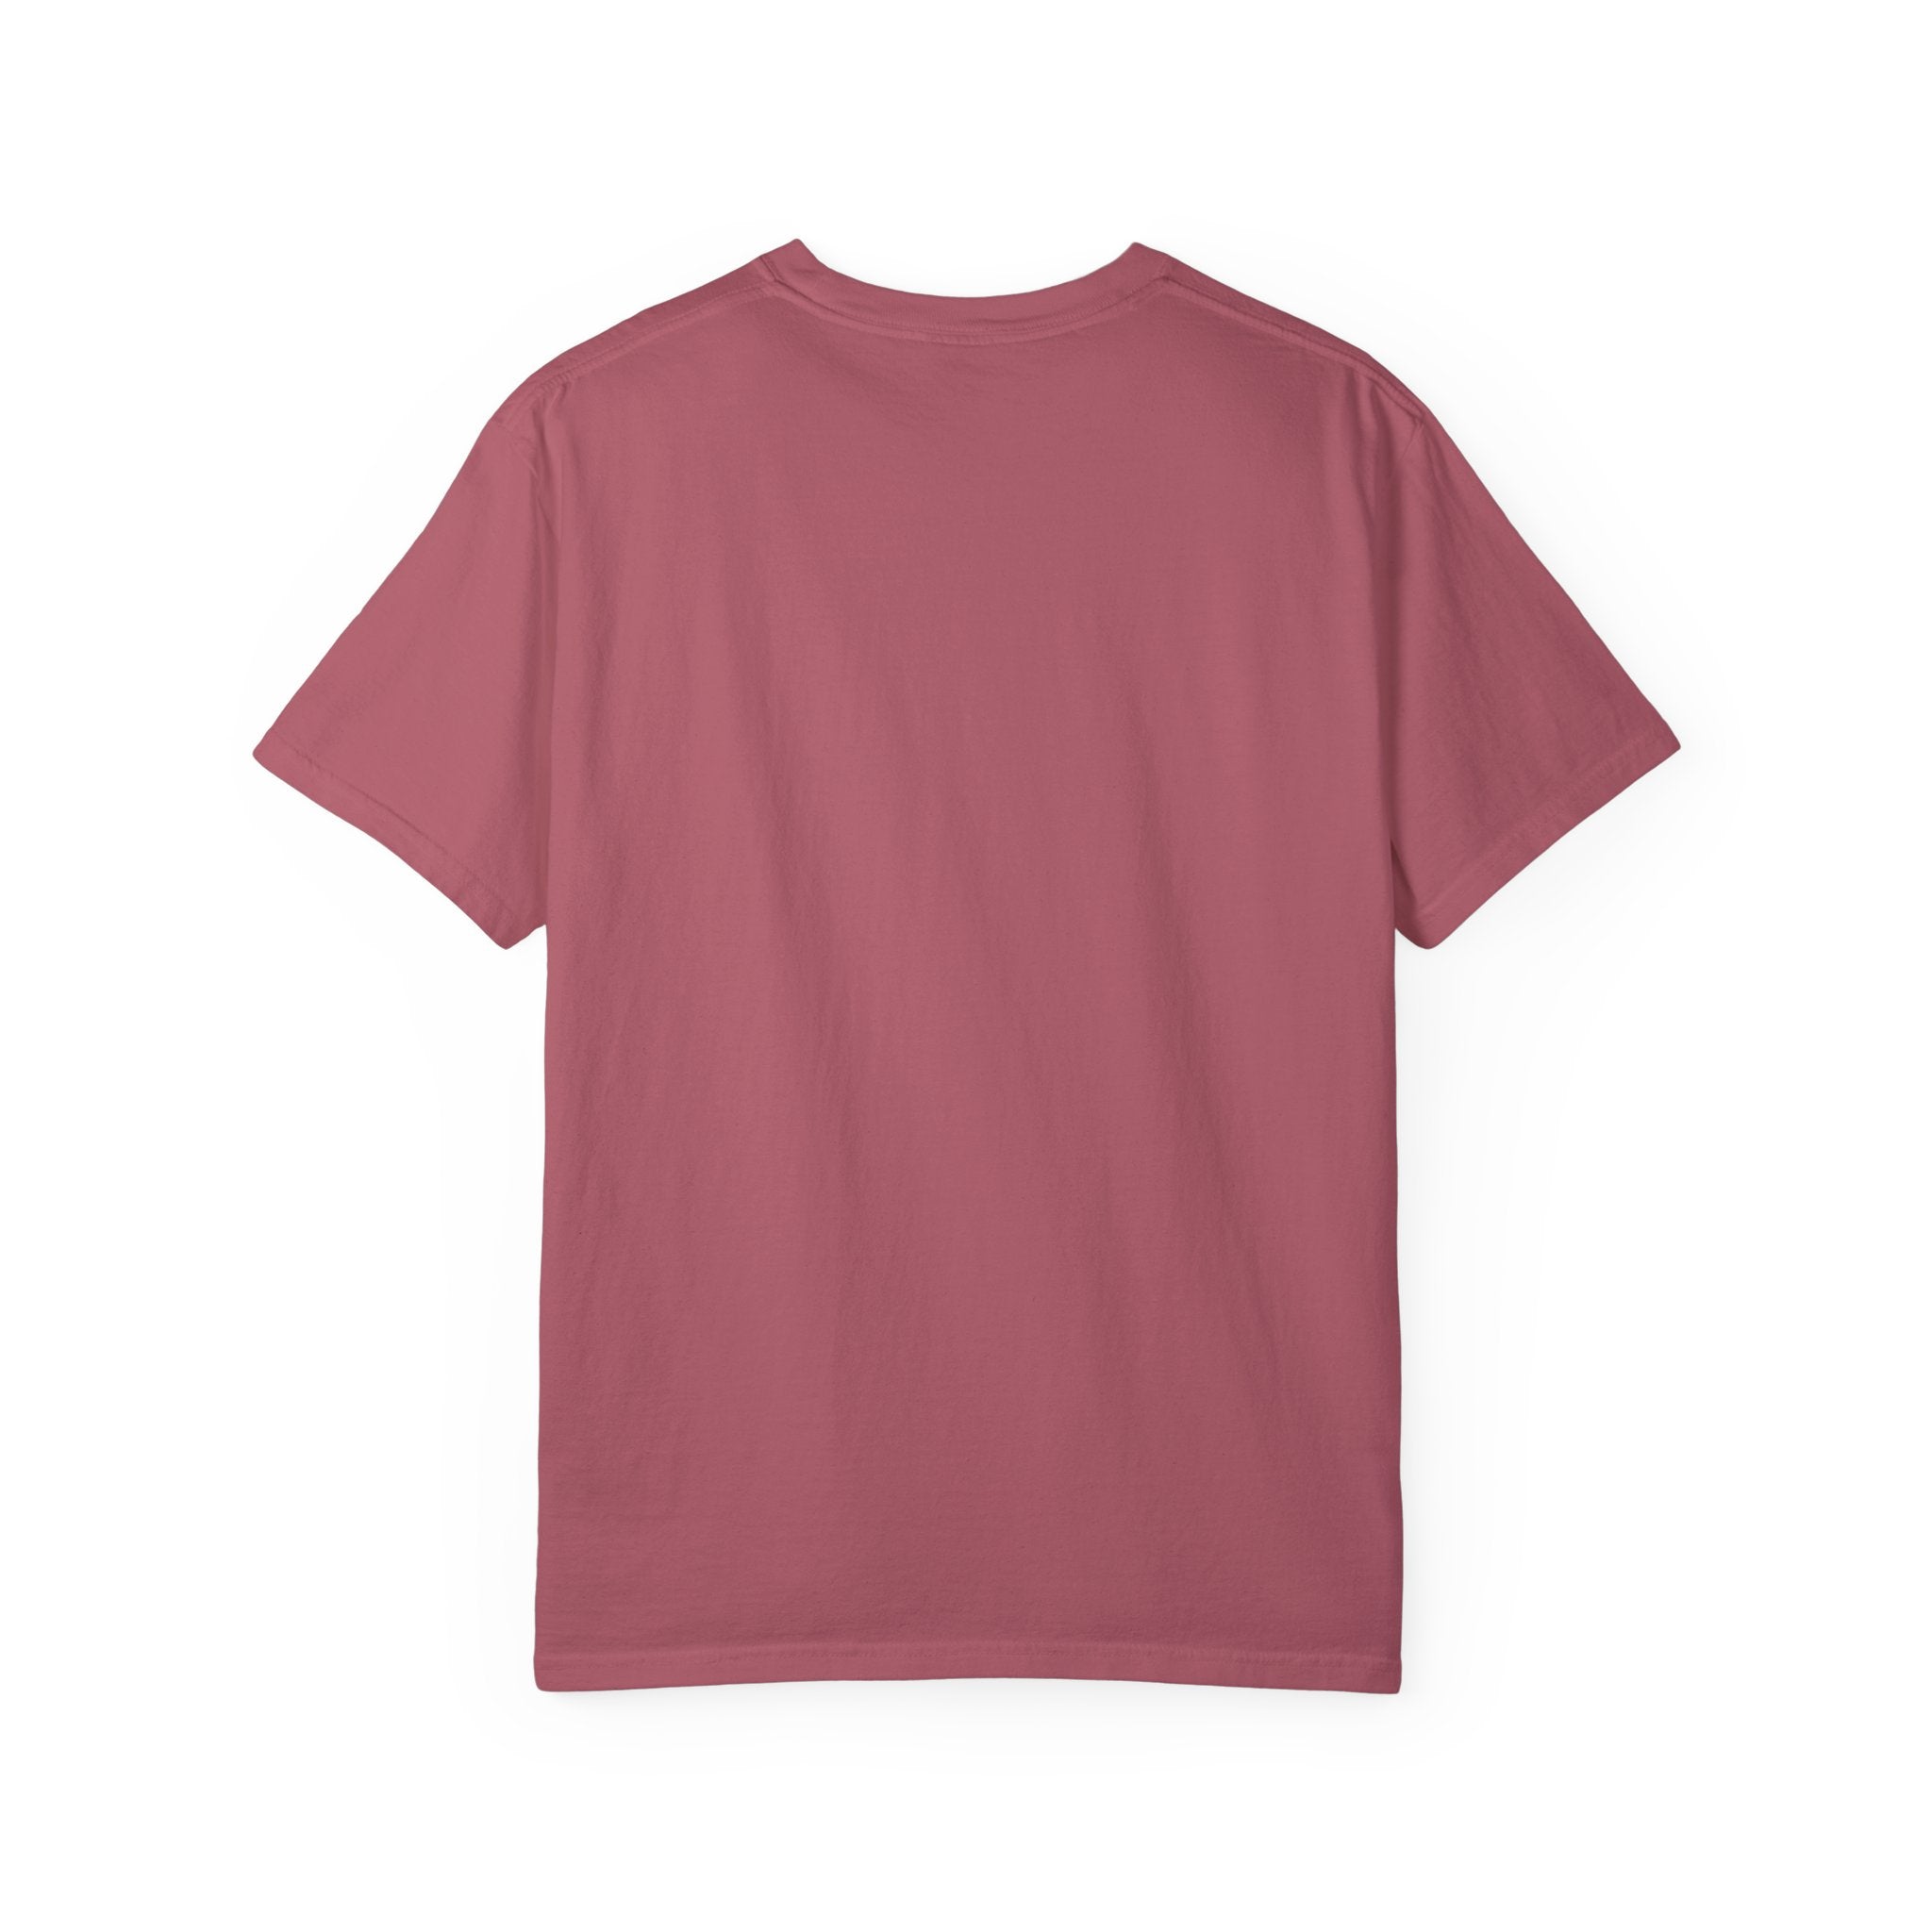 INHALE EXHALE Unisex Garment-Dyed T-shirt